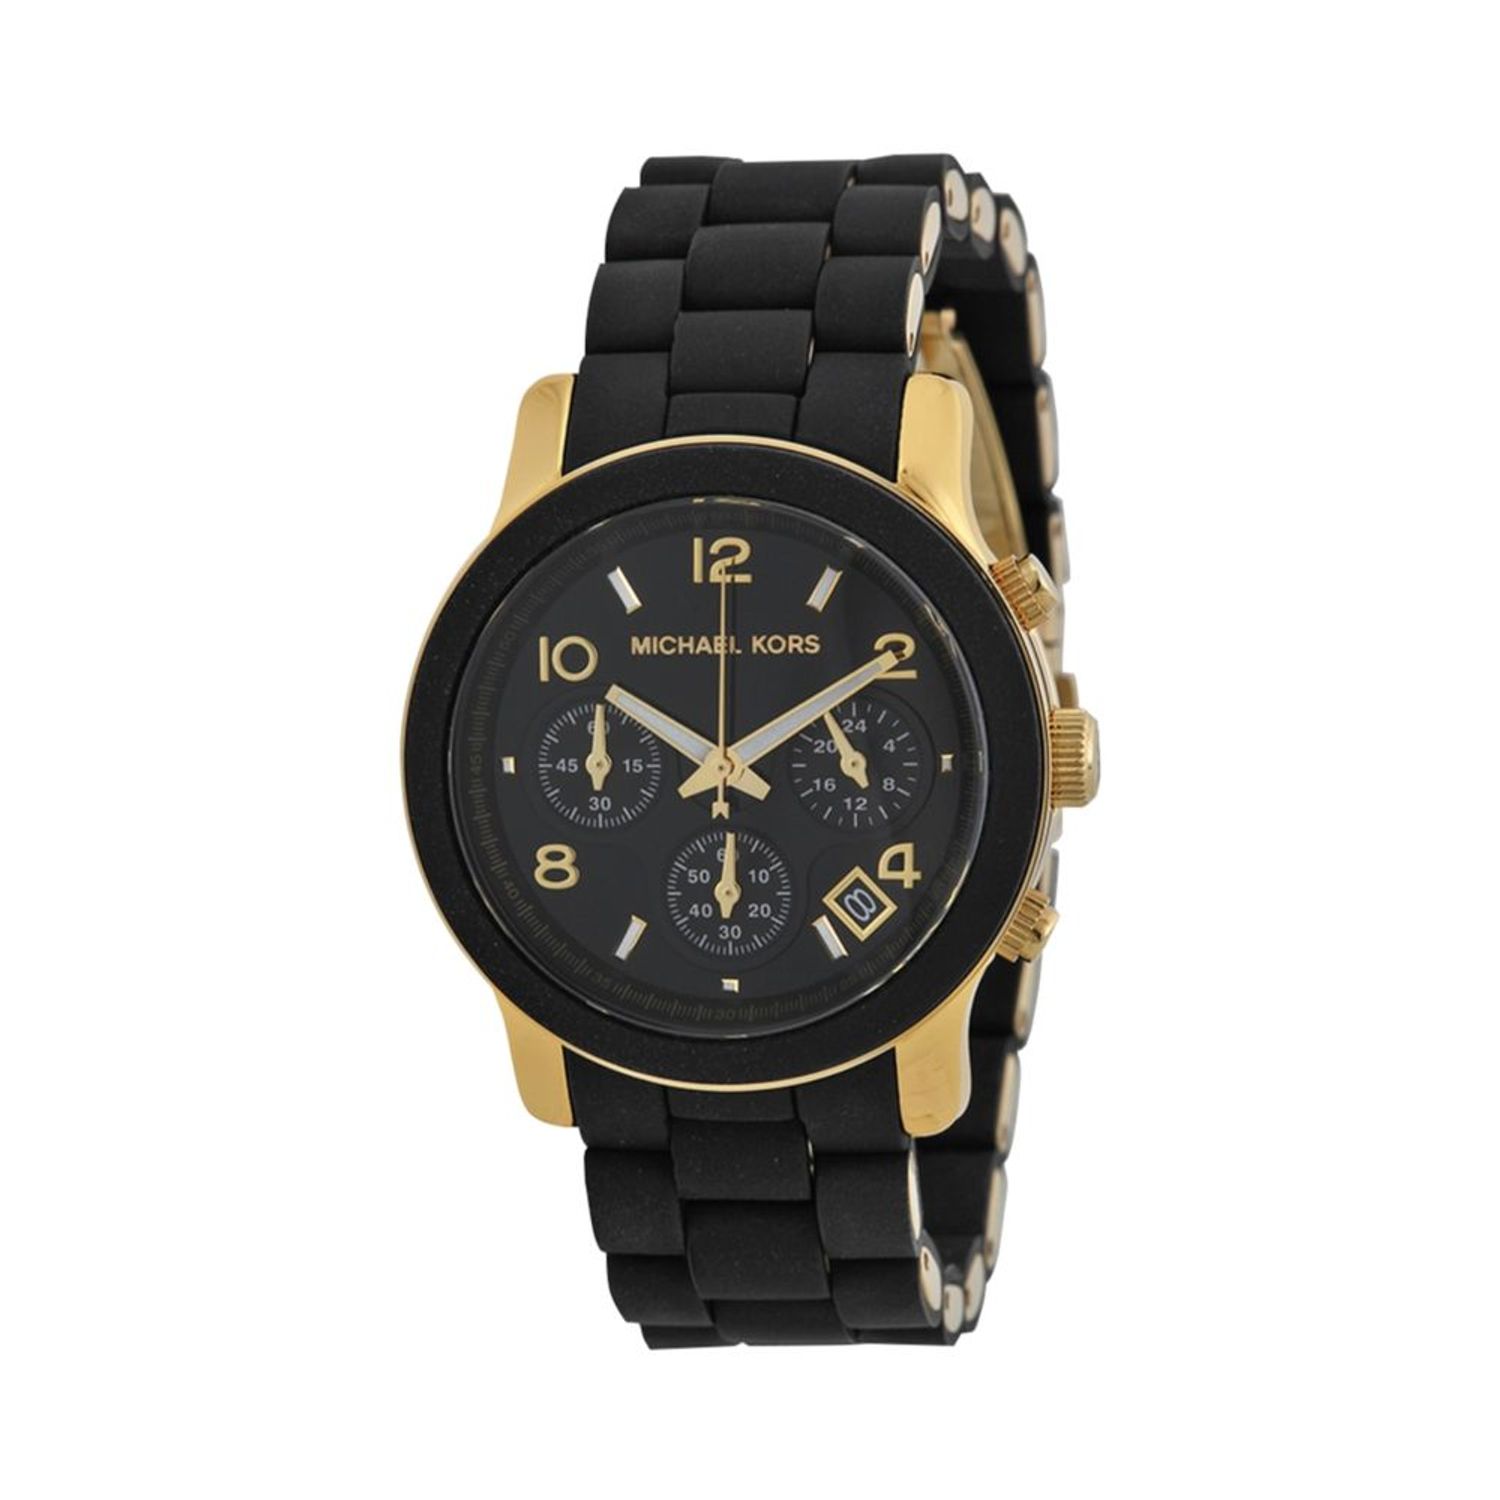 Reloj Michael Kors MK5191 Black and Gold Nuevo para Dama | Oechsle - Oechsle